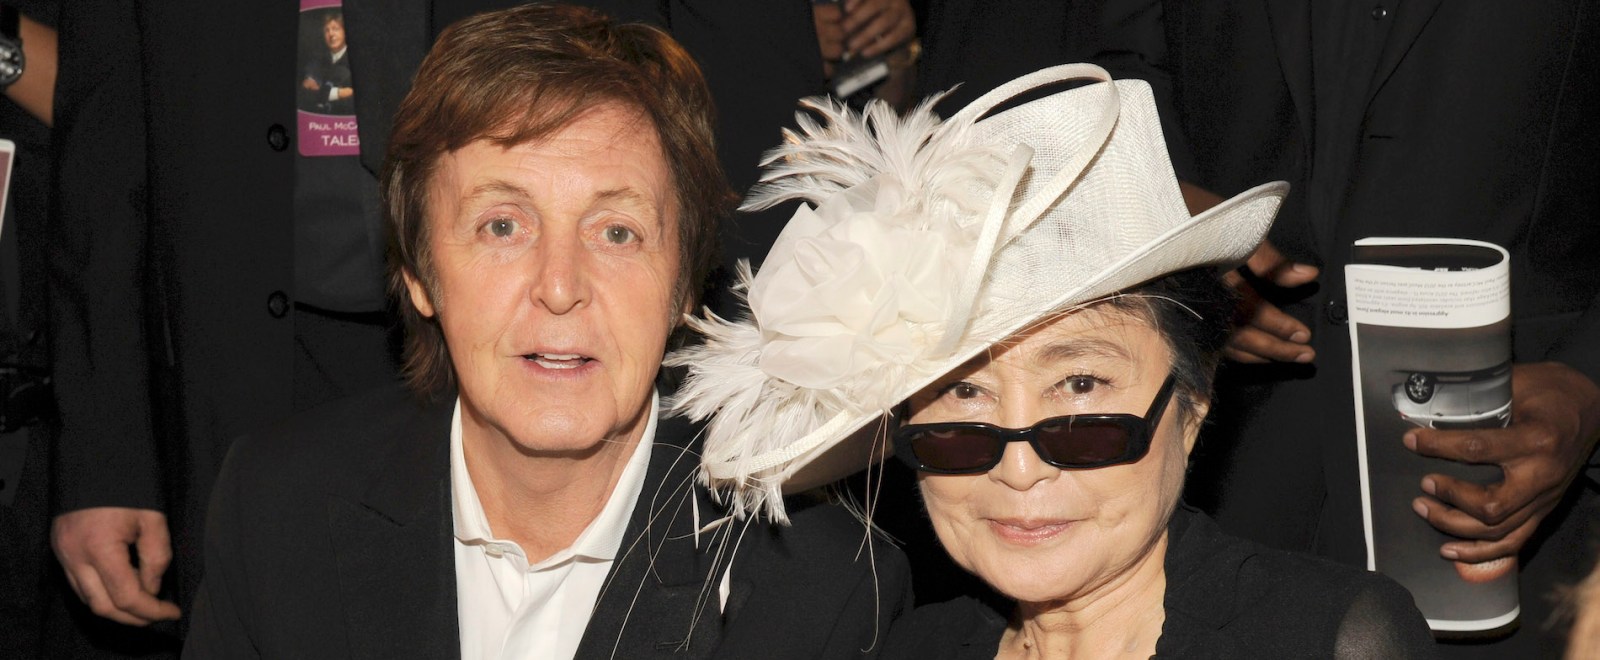 Paul McCartney Yoko Ono 2012 MusiCares Person Of The Year Gala